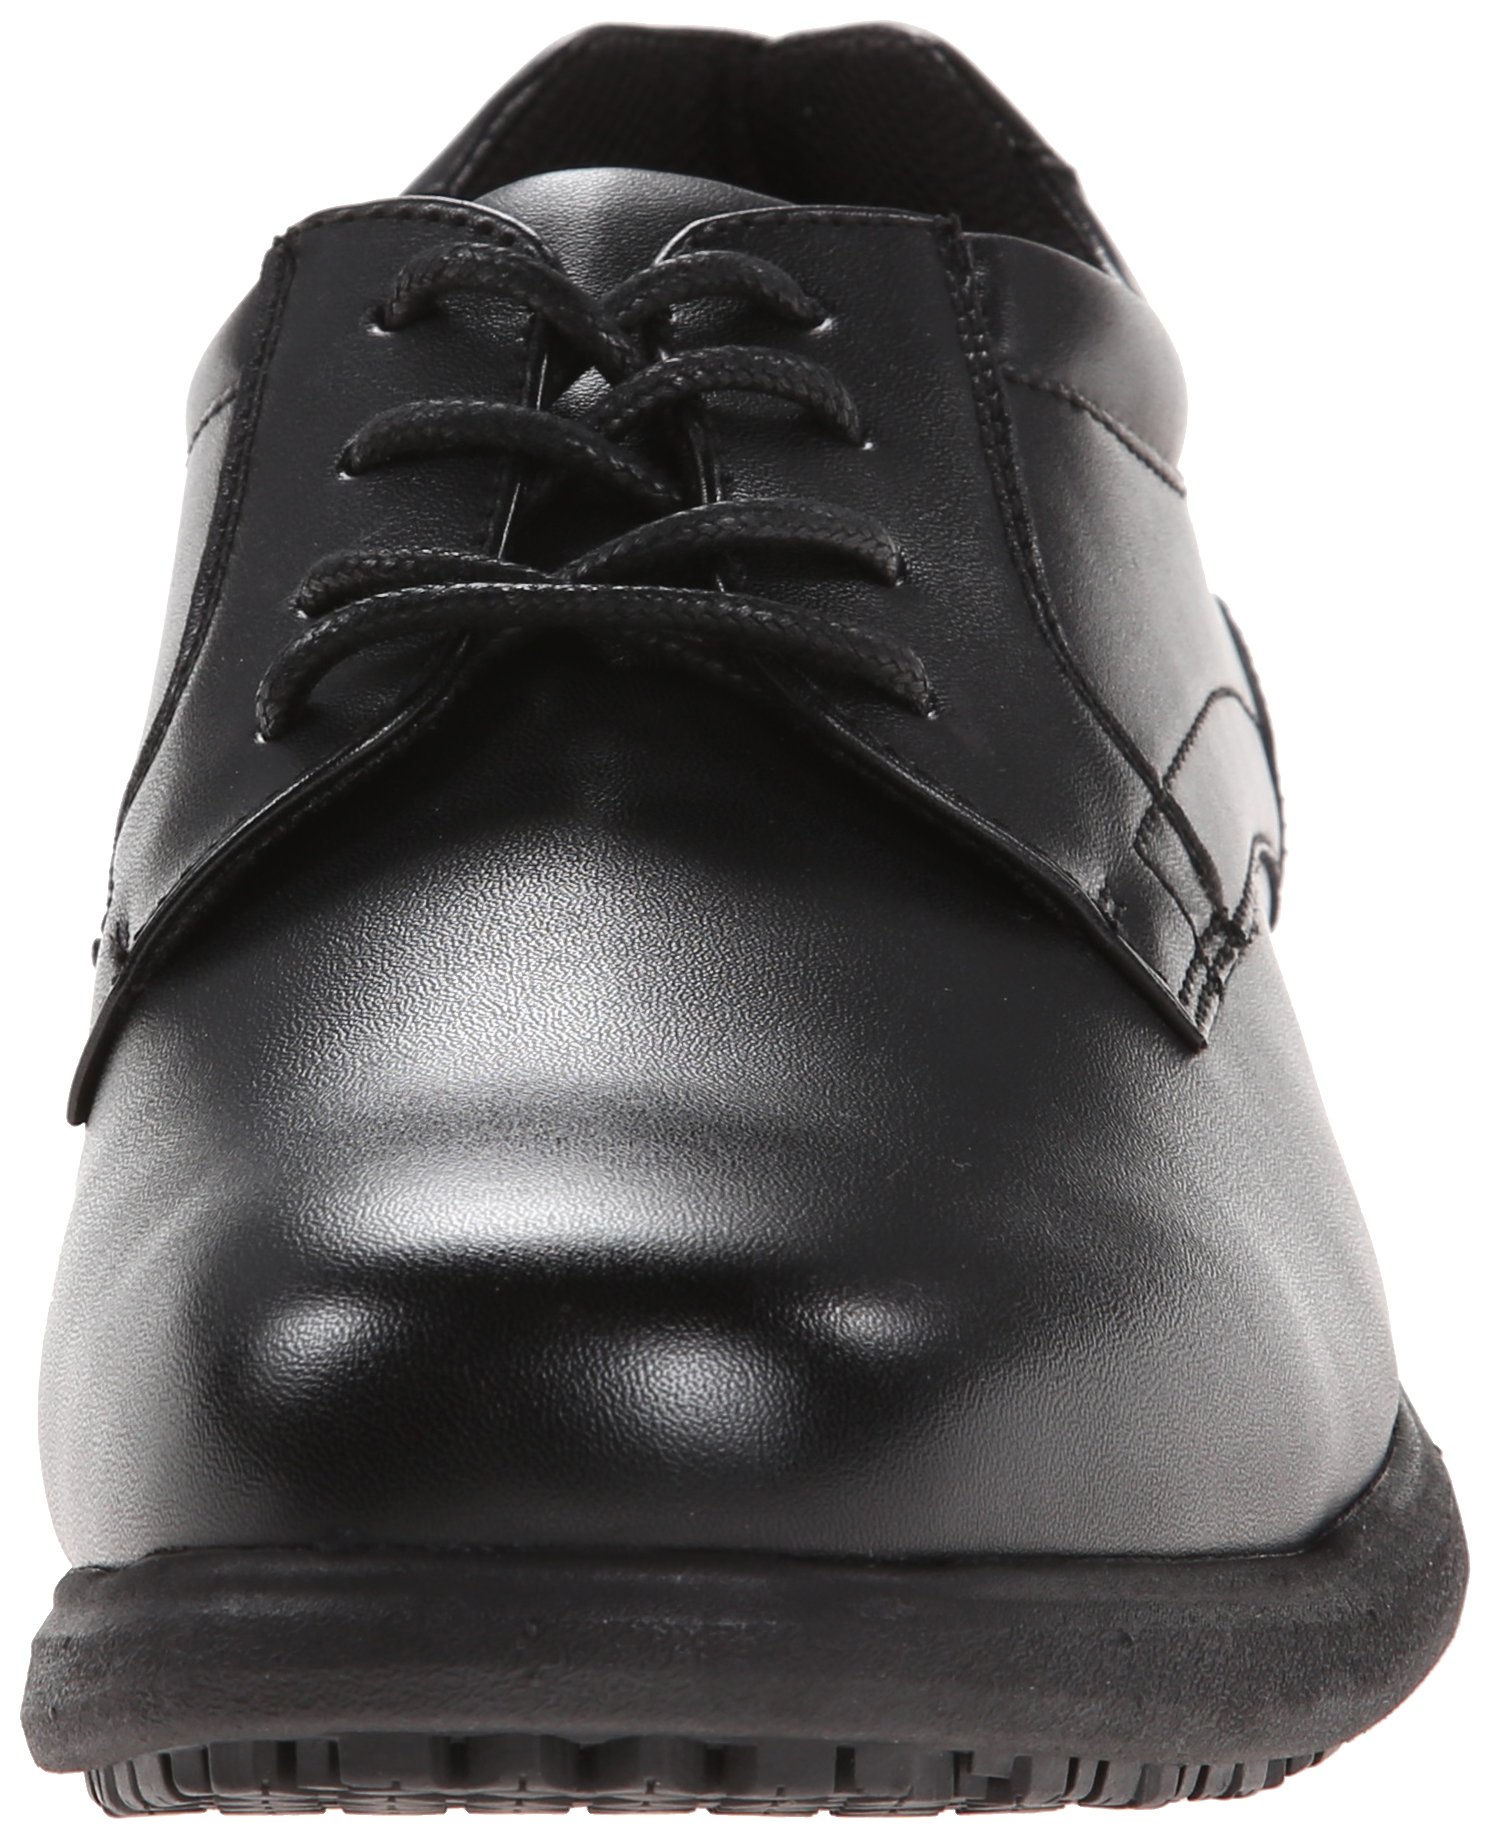 Nunn Bush Men's Sherman Slip-Resistant Work Shoe Oxford Sneaker